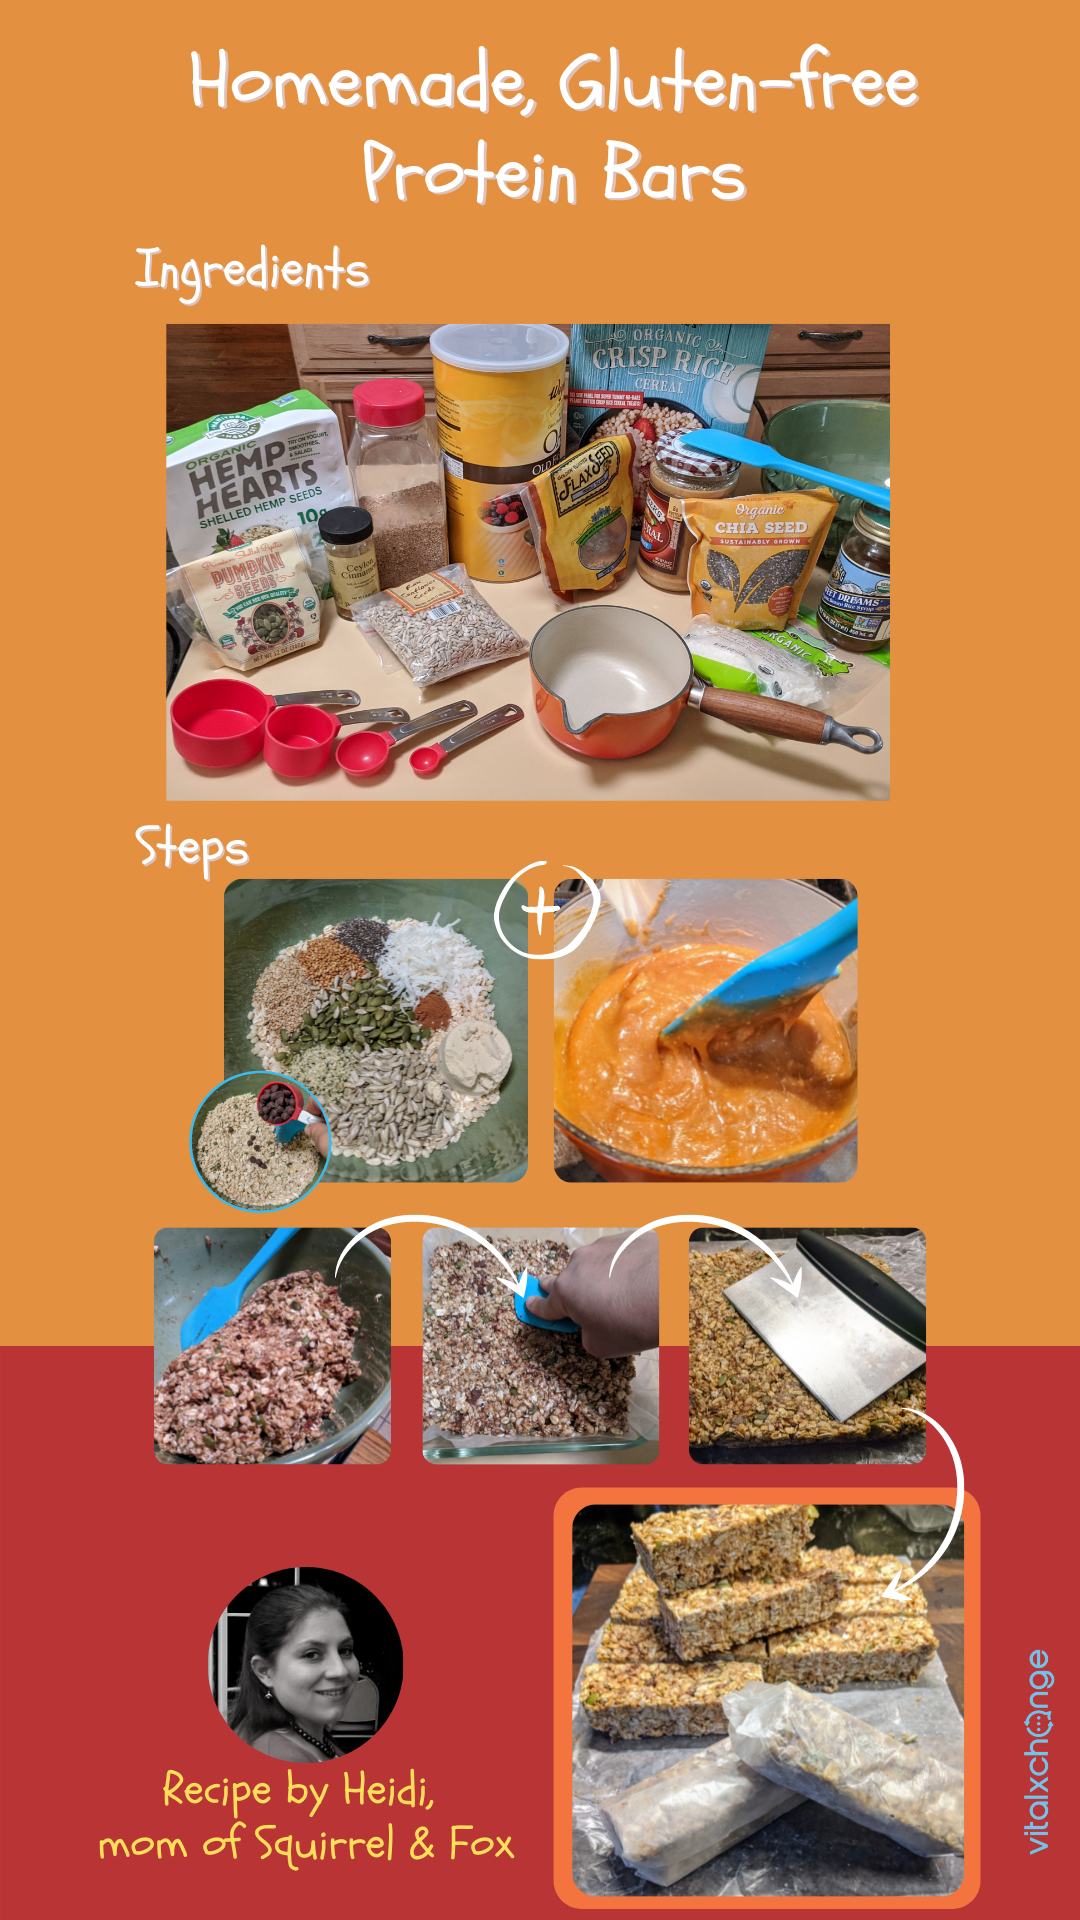 Homemade, Gluten-free Protein Bars Recipe on Vitalxchange Infographic